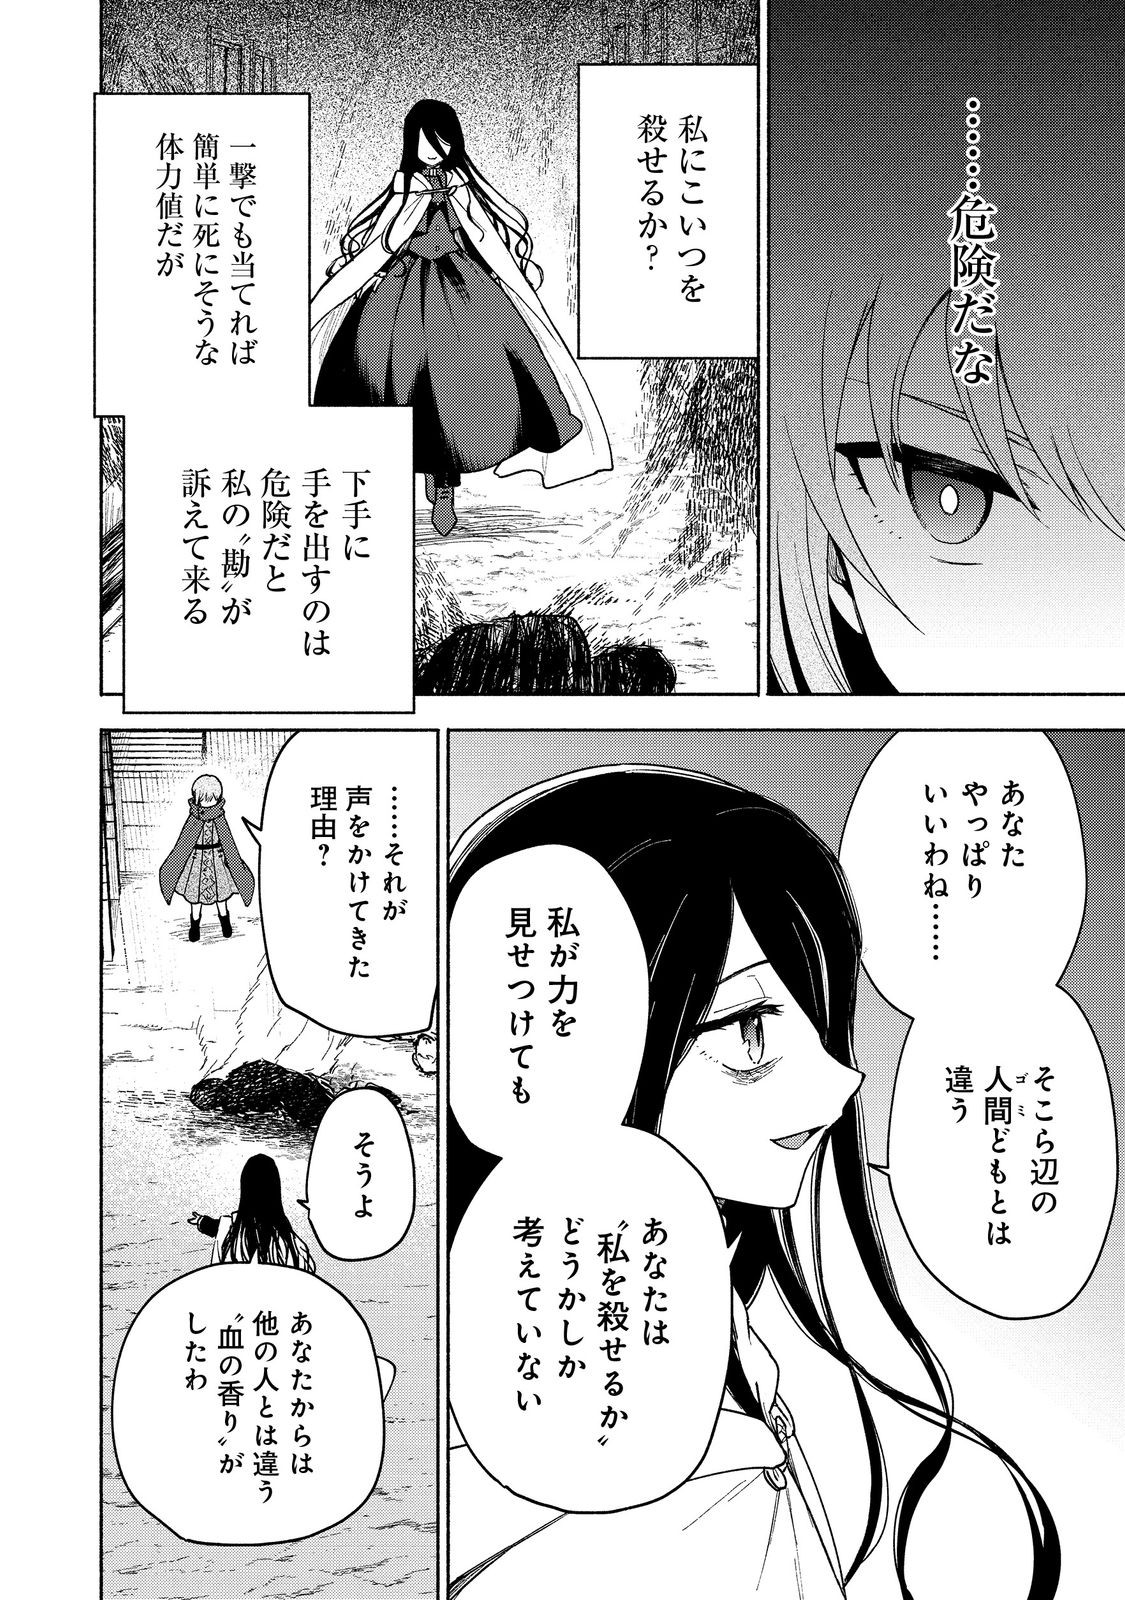 Otome Game no Heroine de Saikyou Survival - Chapter 23 - Page 2